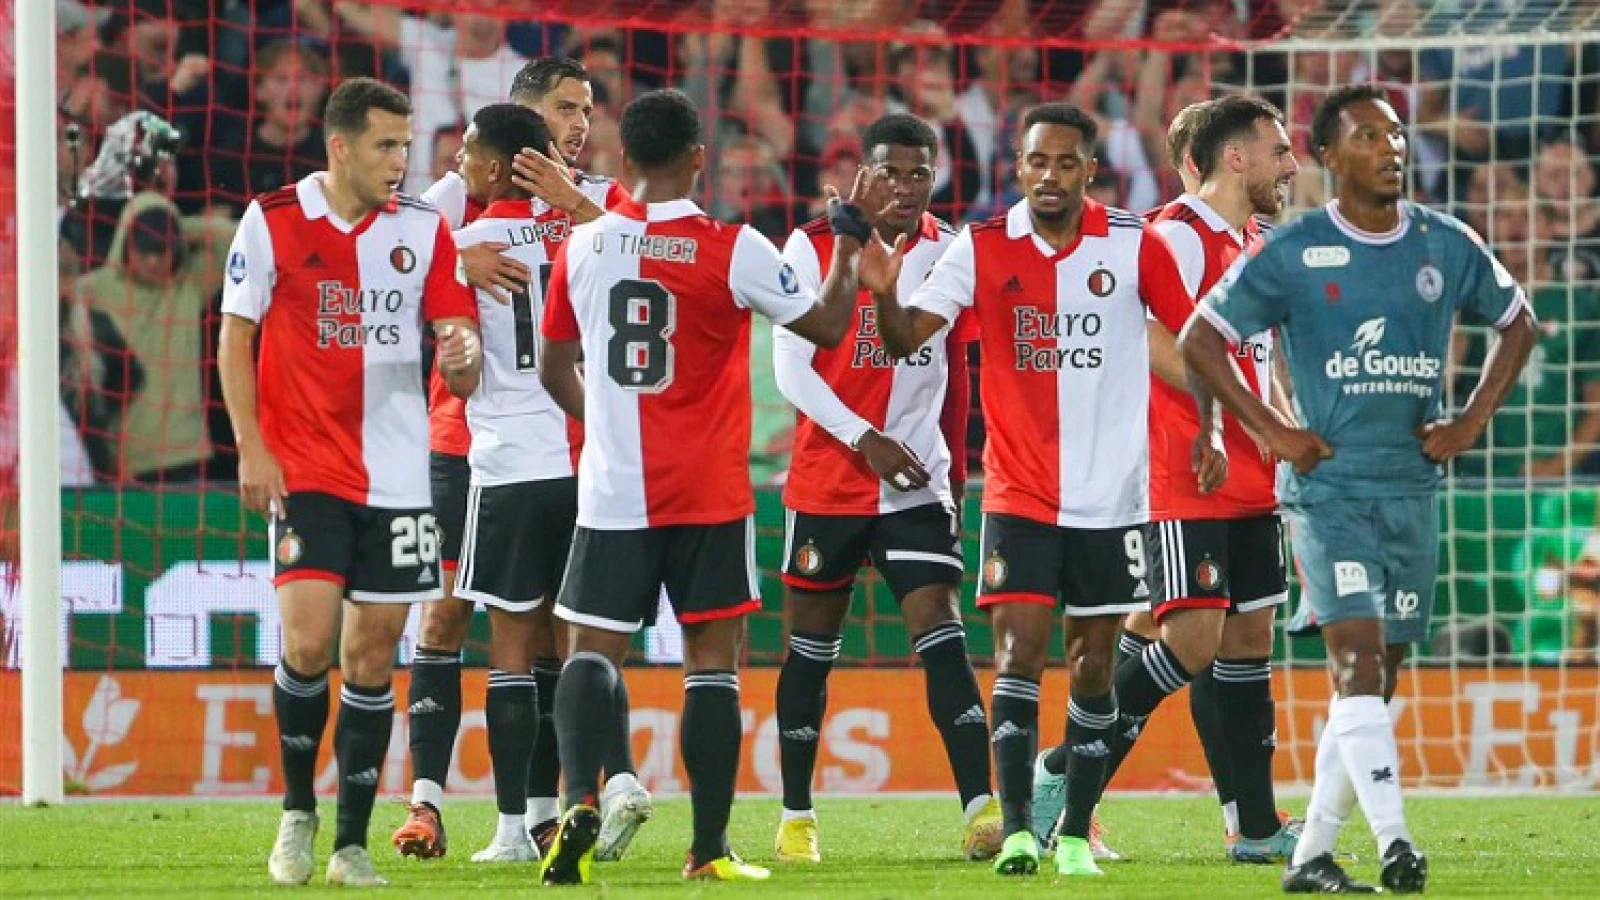 Overtuigende overwinning van Feyenoord op stadsgenoot Sparta Rotterdam